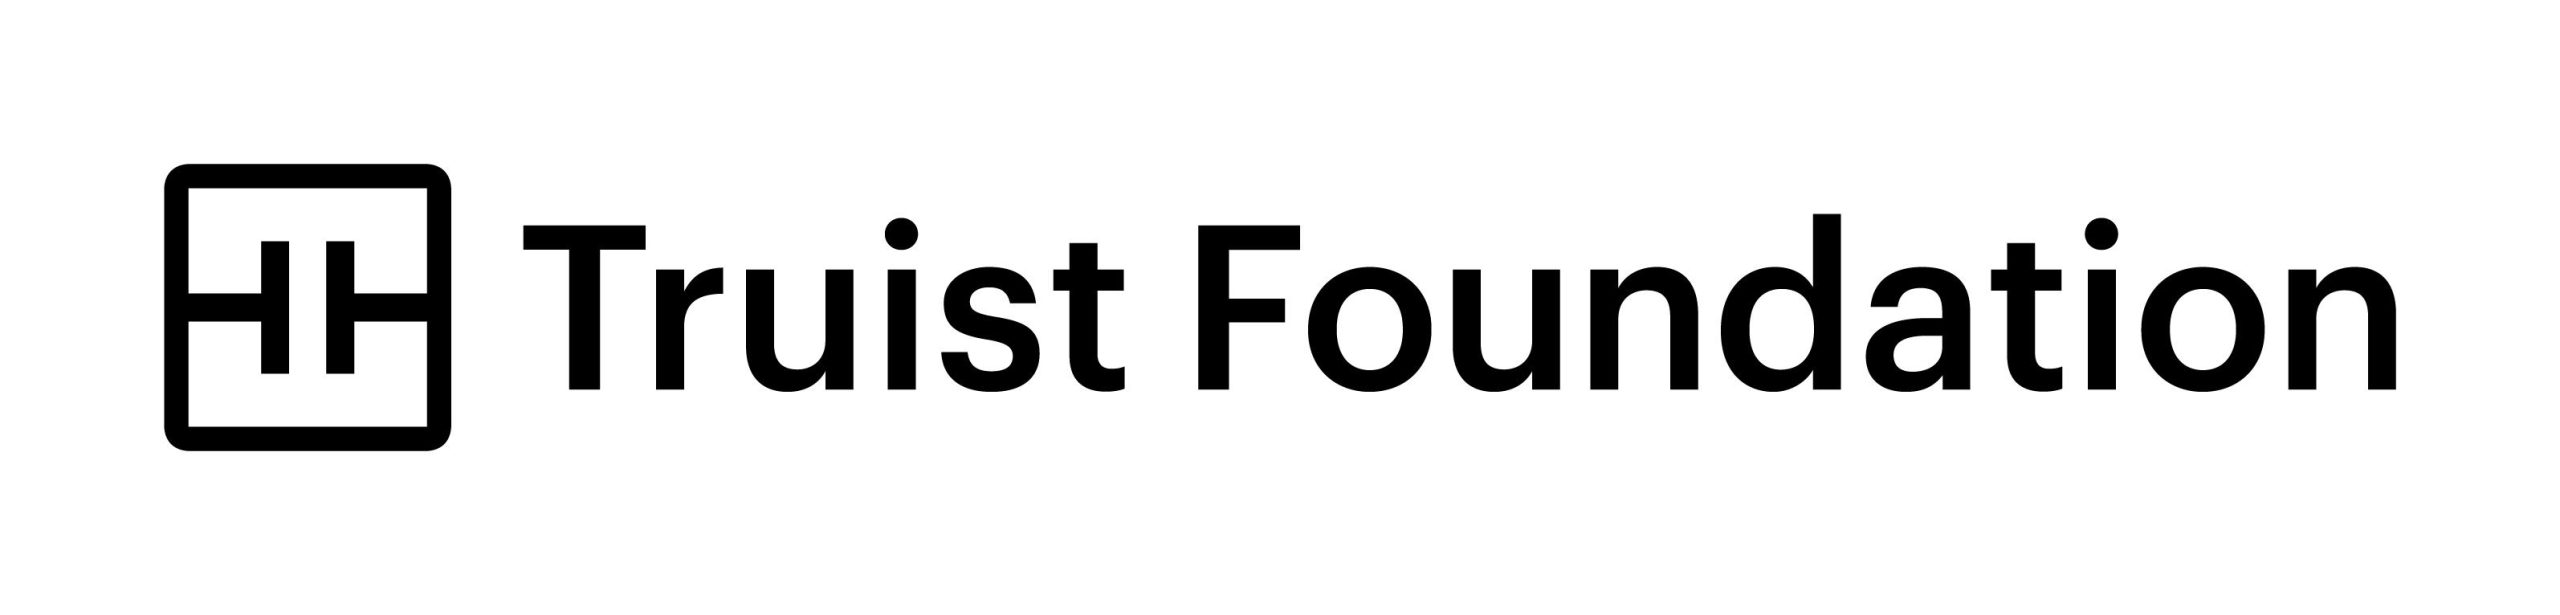 Trust Foundation logo